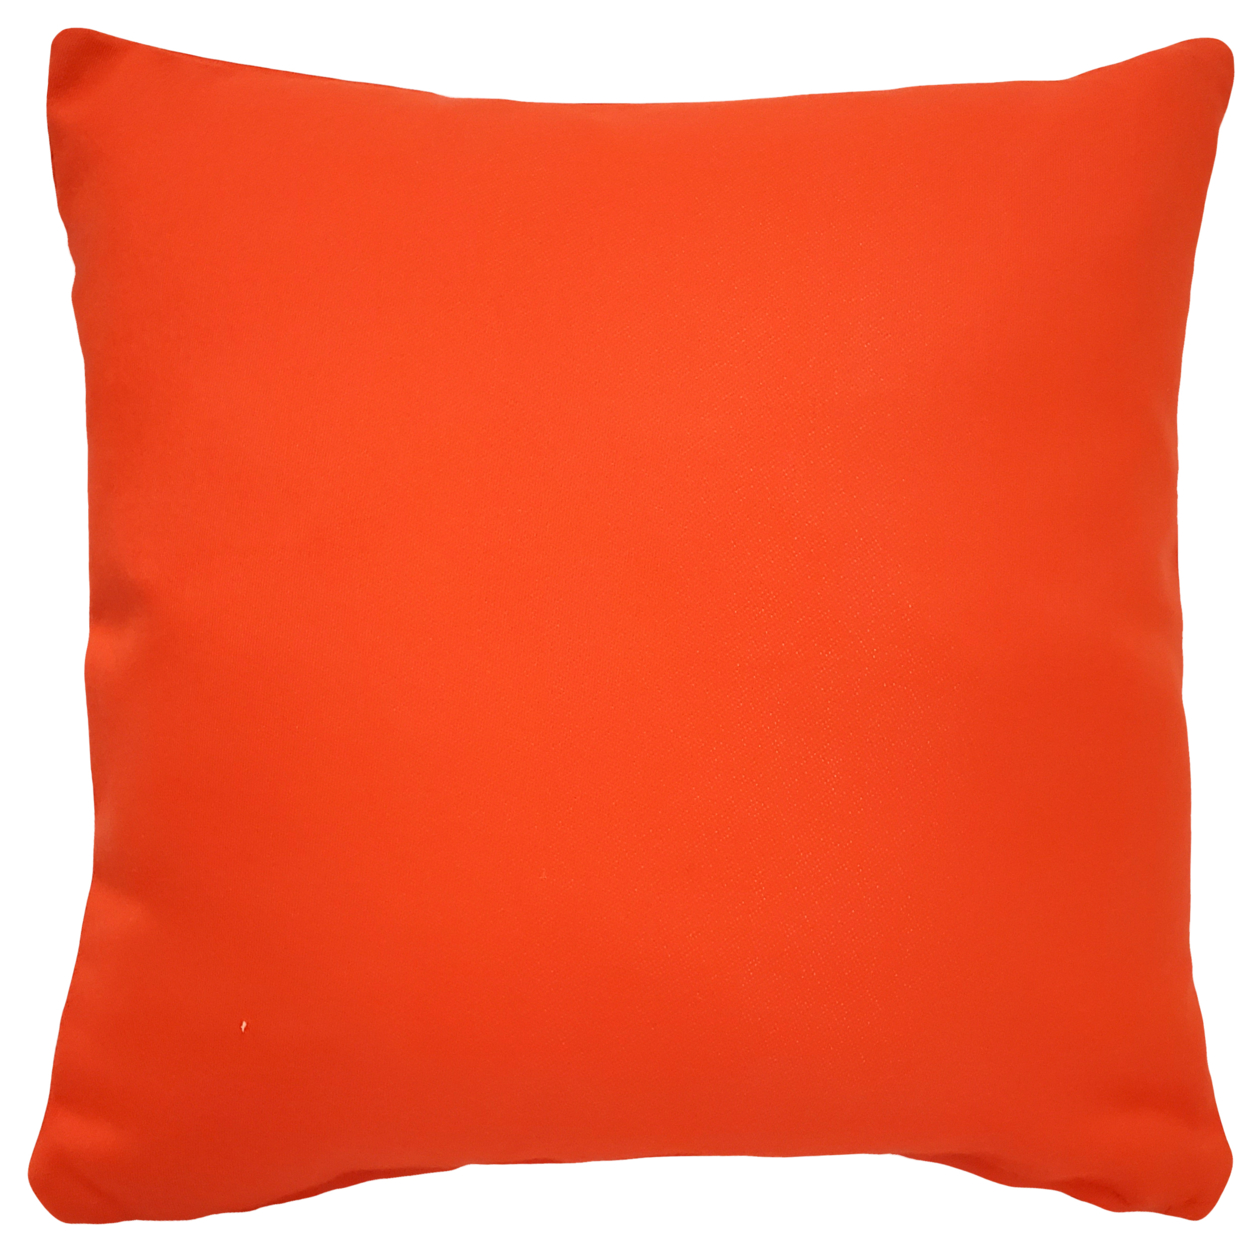 Neon Orange Throw Pillow 16x16, With Polyfill Insert